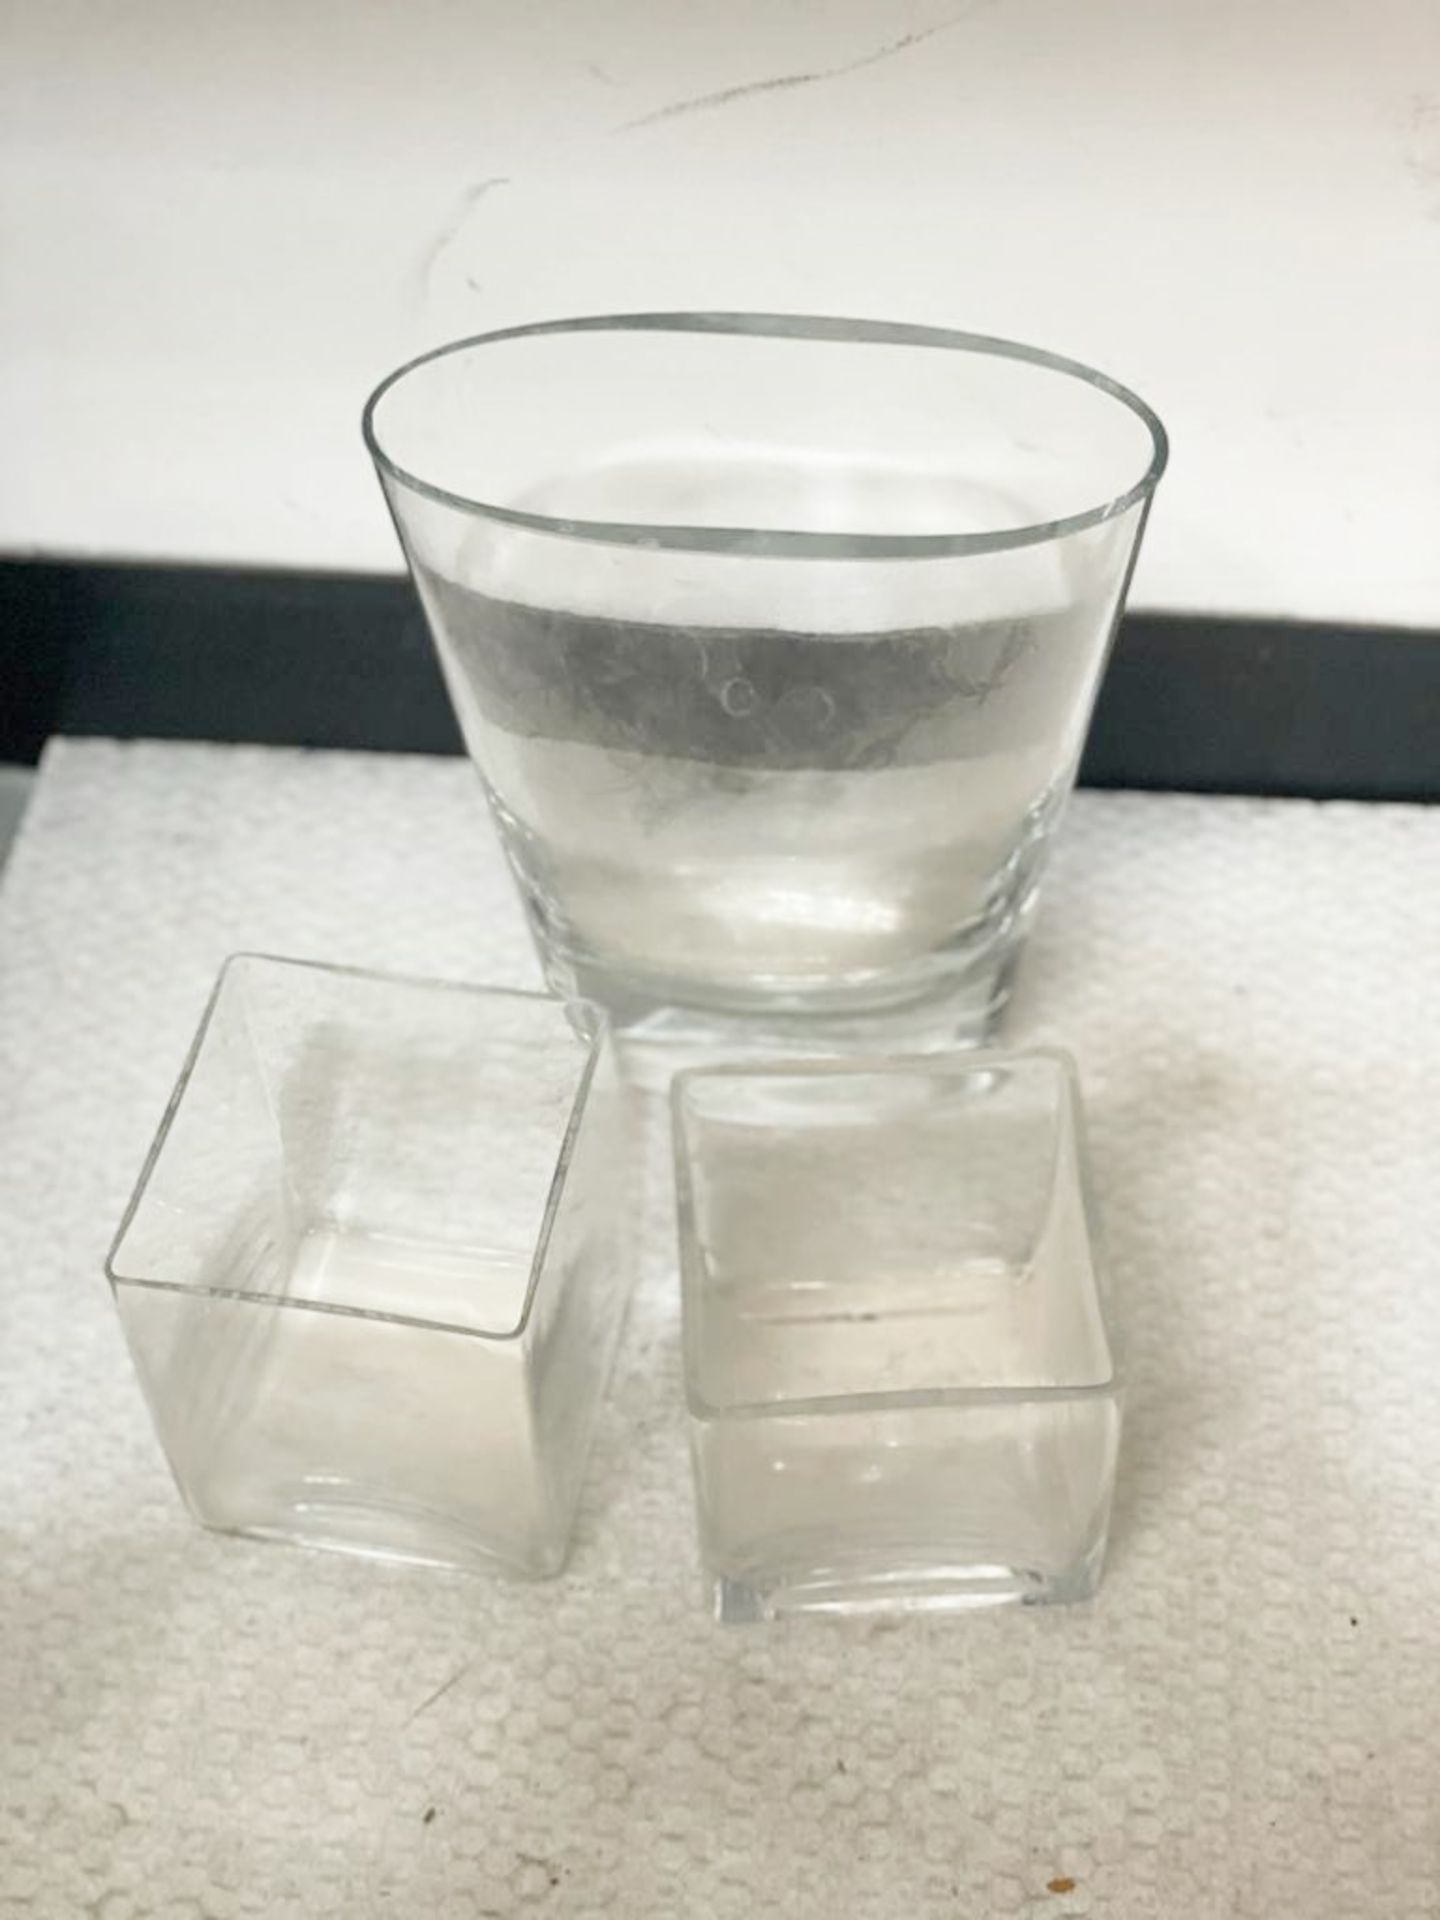 1 x Collection Of Glassware - Ref: AUR163  - CL652 - Location: Altrincham WA14 Dimensions: 10 x - Image 2 of 2